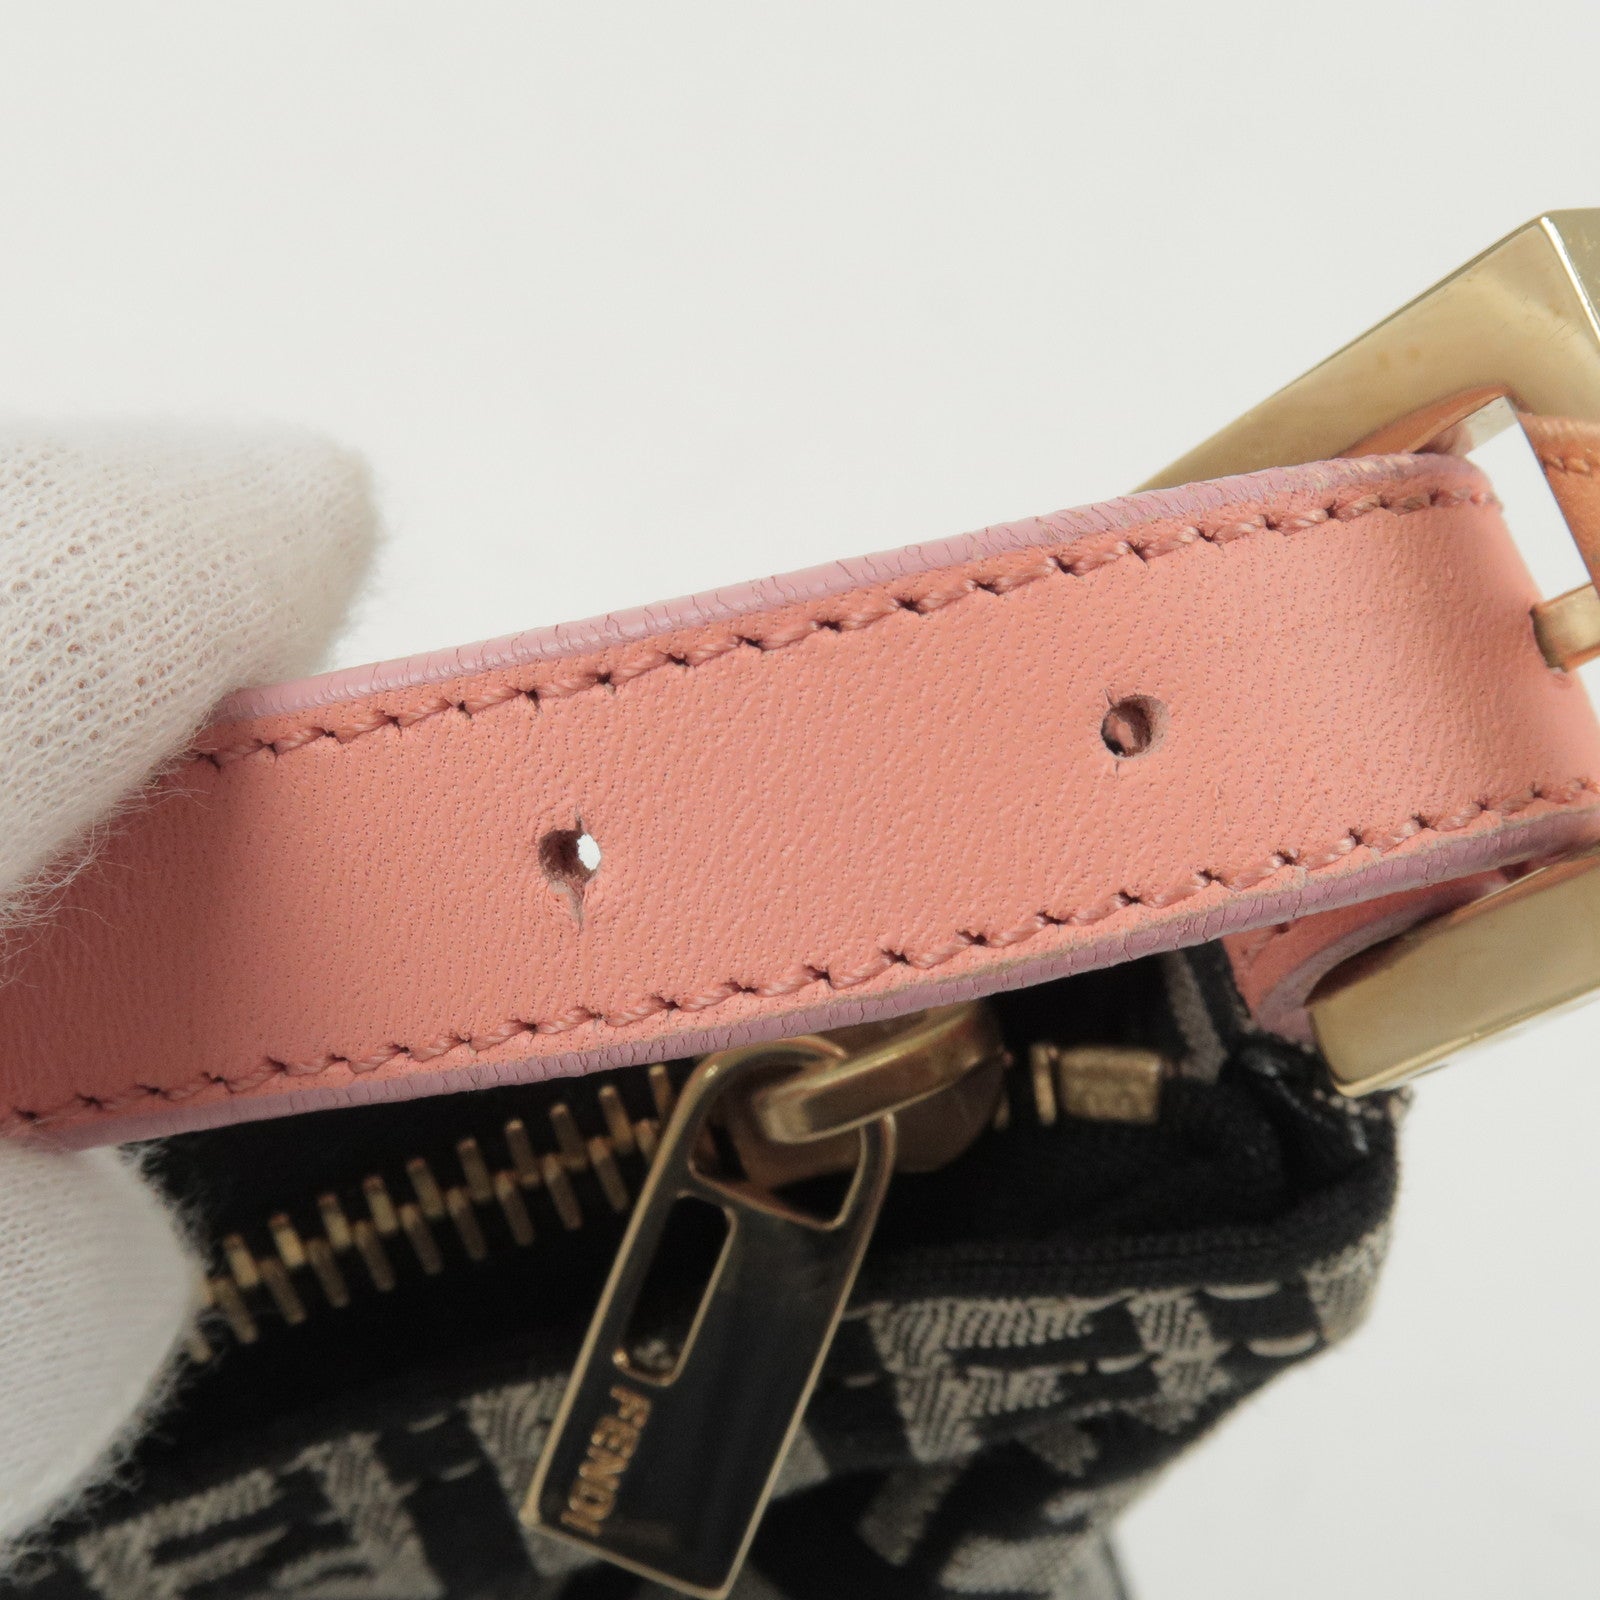 FENDI-Zucchino-Canvas-Leather-Hand-Bag-Black-Gray-Pink-8N0005